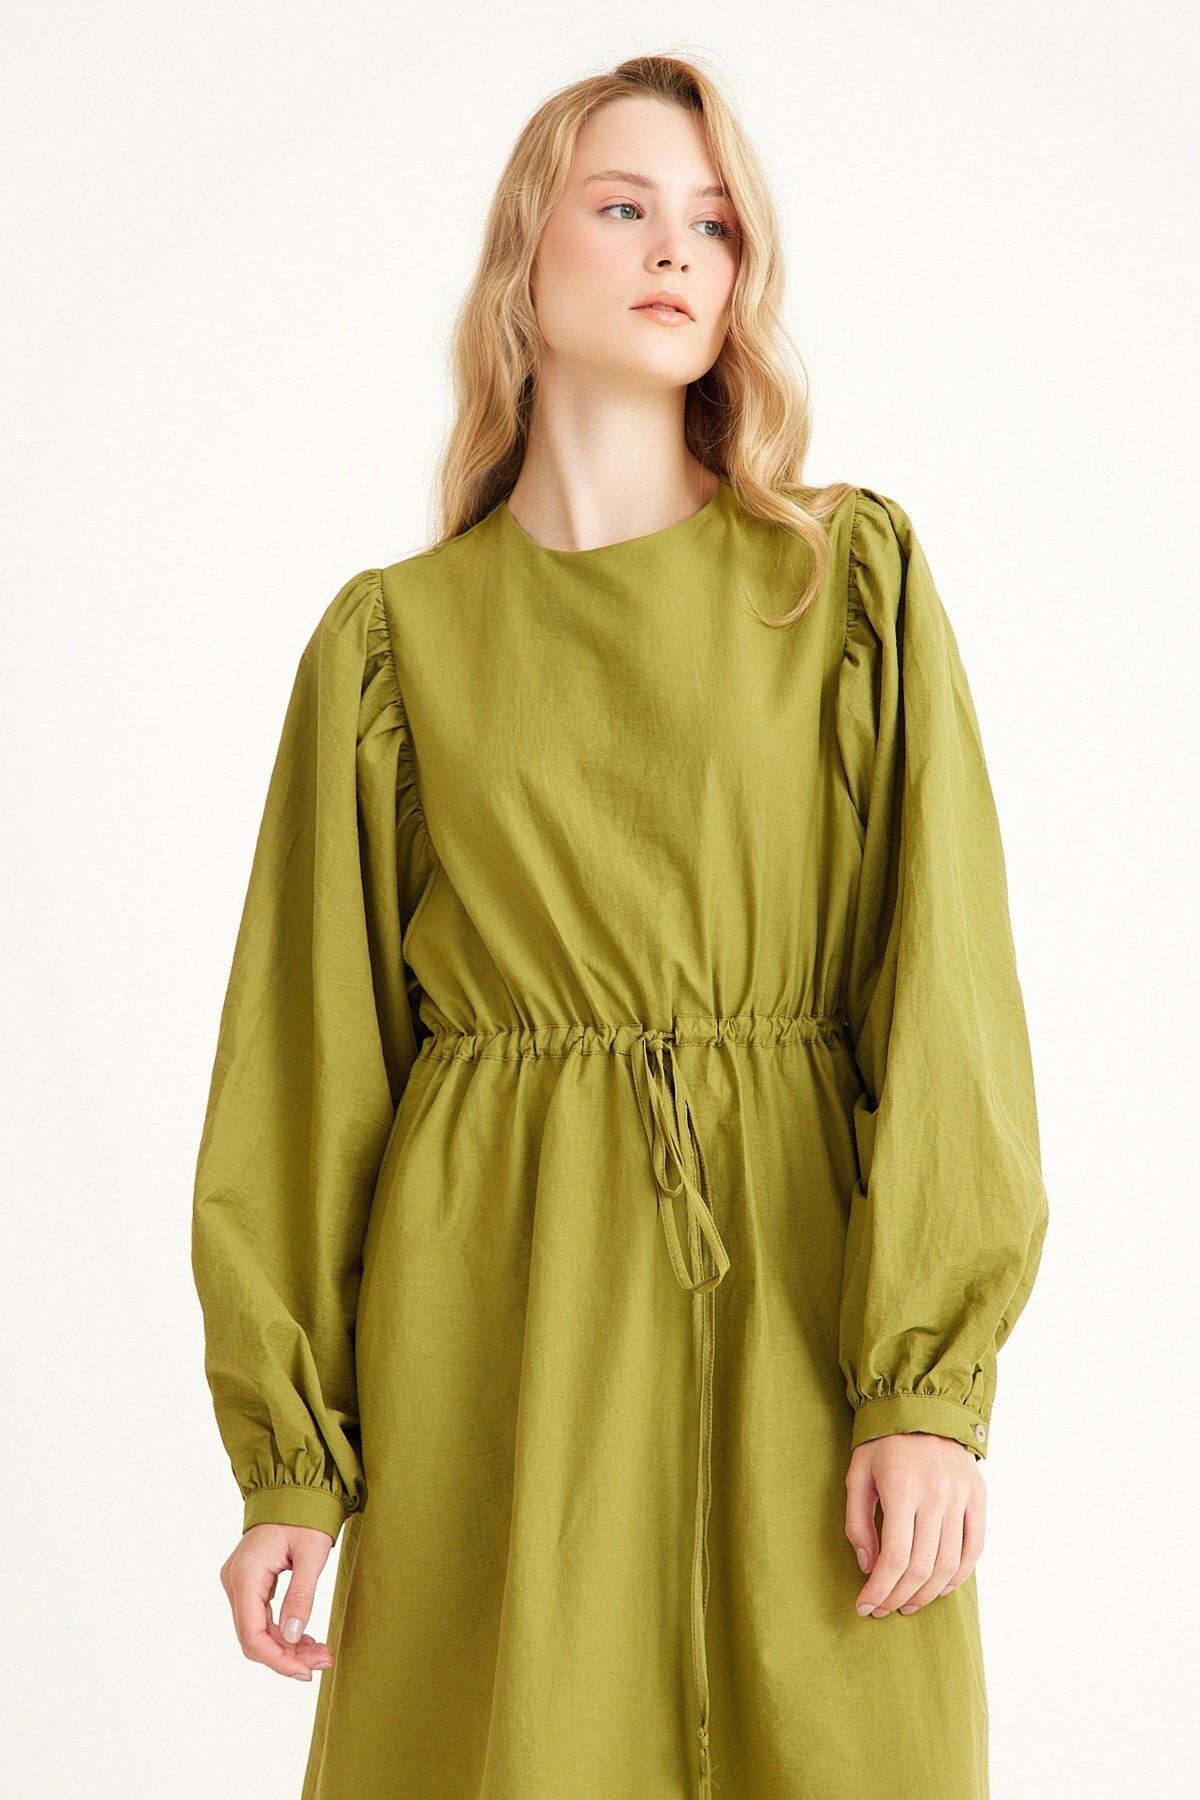 QANU Pamuklu Büzgülü Elbise Yağ Yeşili